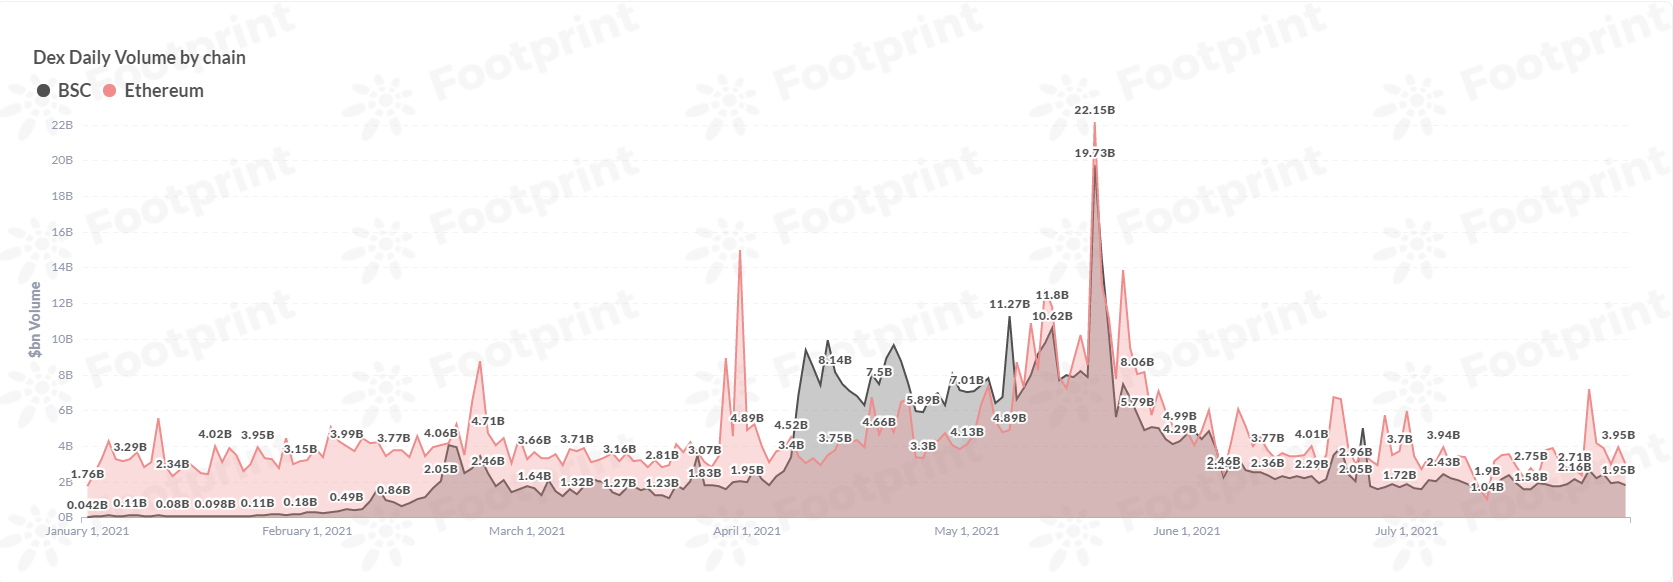 Dex跨链每日交易量（自2021年1月） 数据来源：Footprint